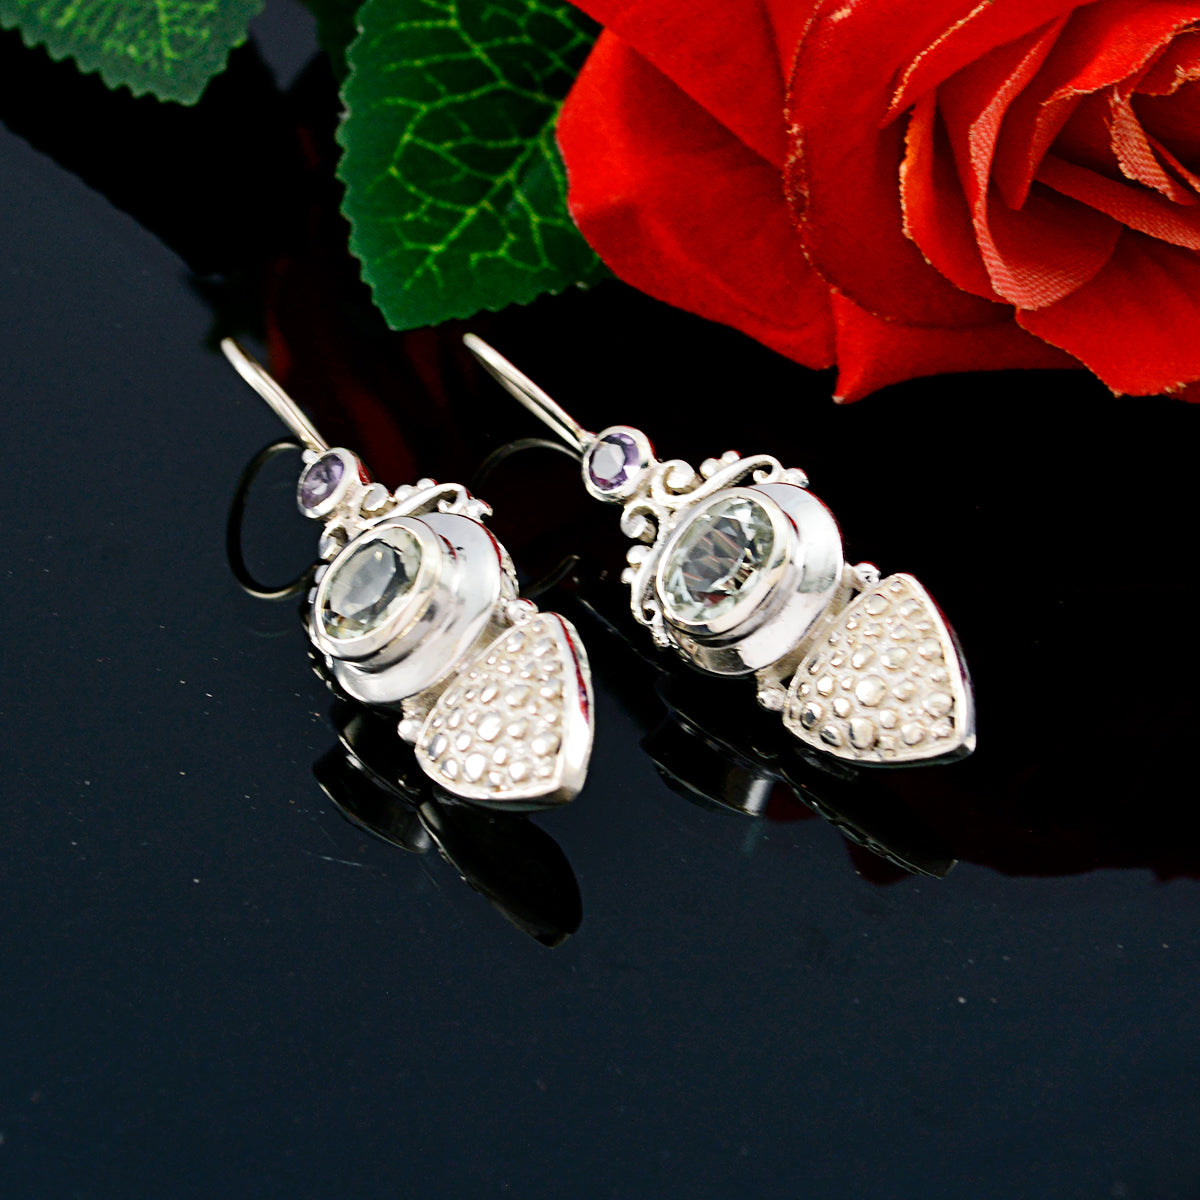 Riyo Real Gemstones round Faceted Multi Multi Stone Silver Earrings st. patricks day gift